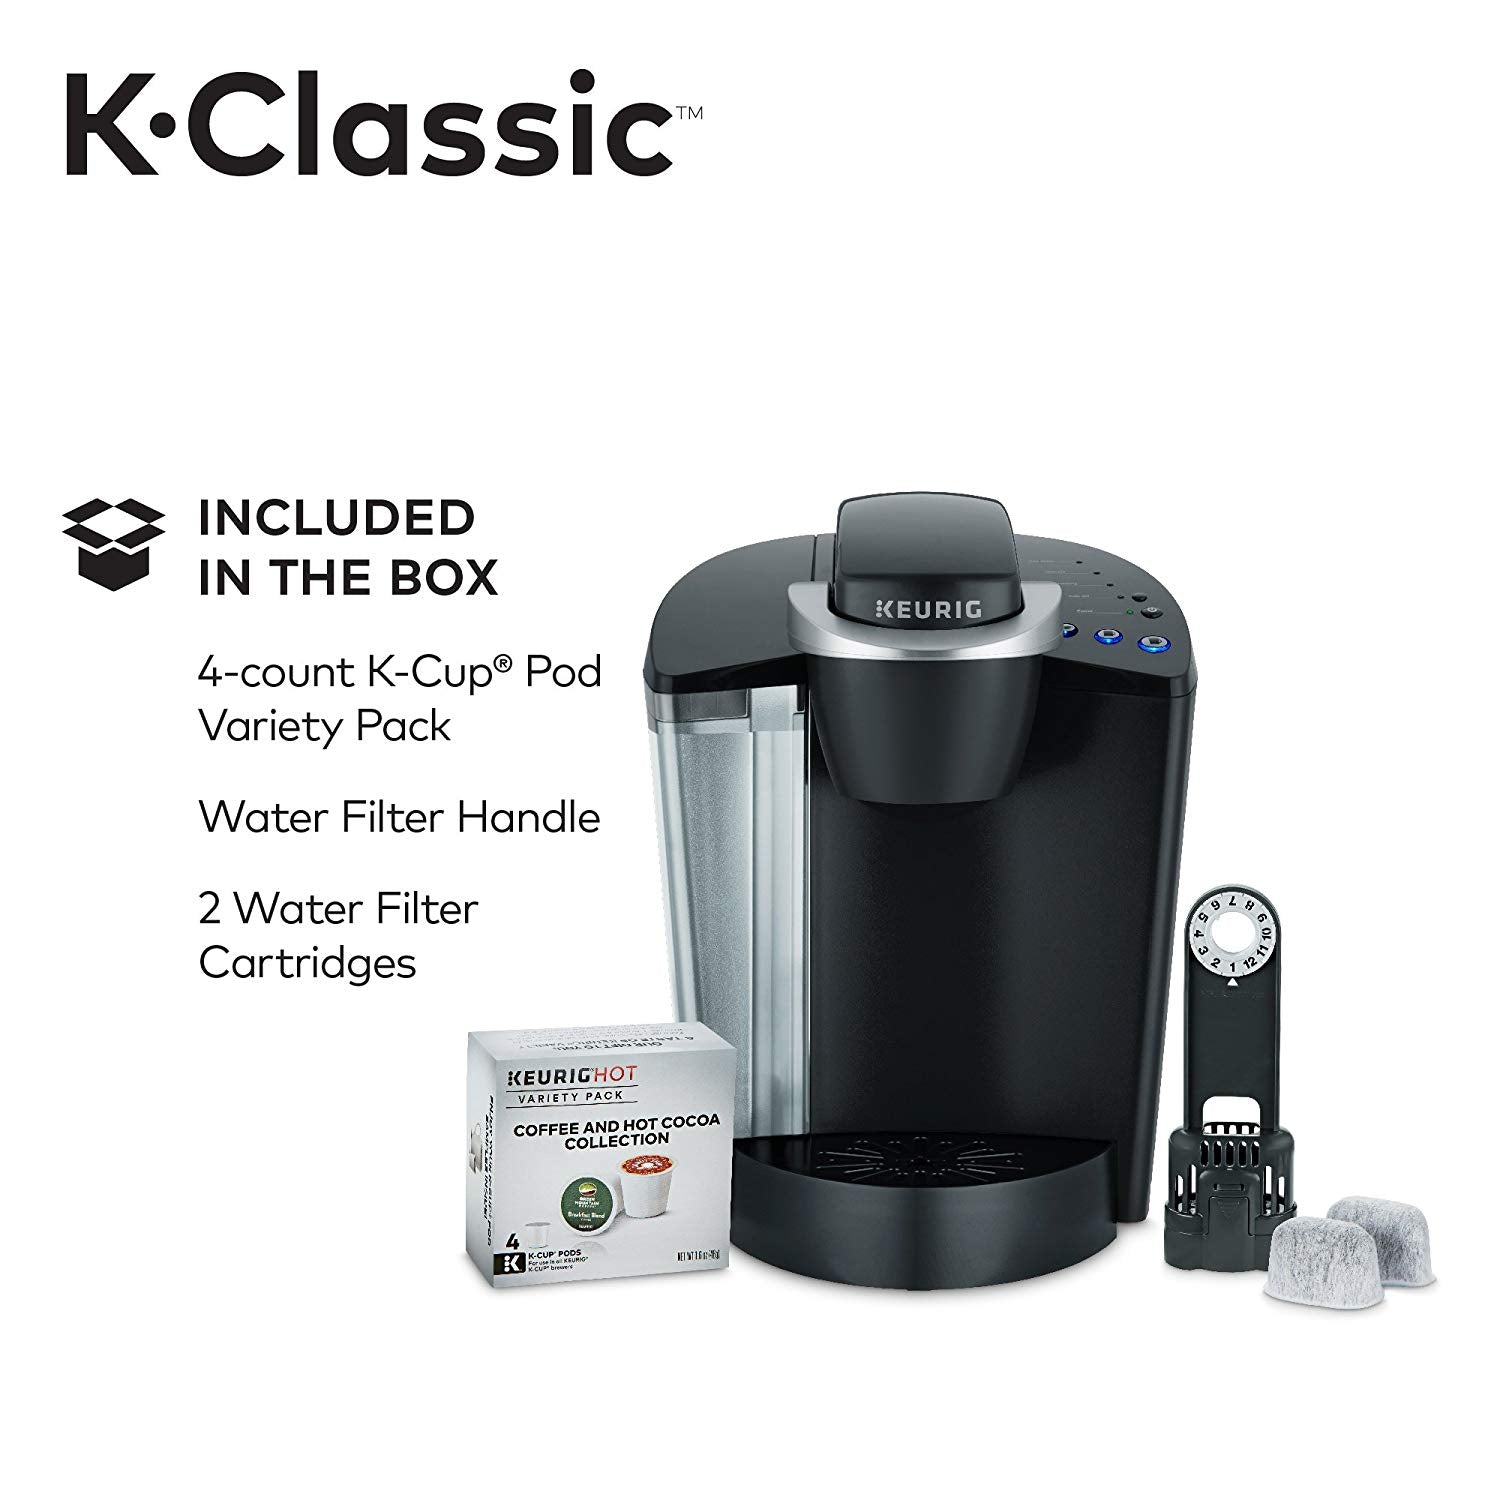 Keurig K-Classic Coffee Maker, Single Serve K-Cup Pod Coffee